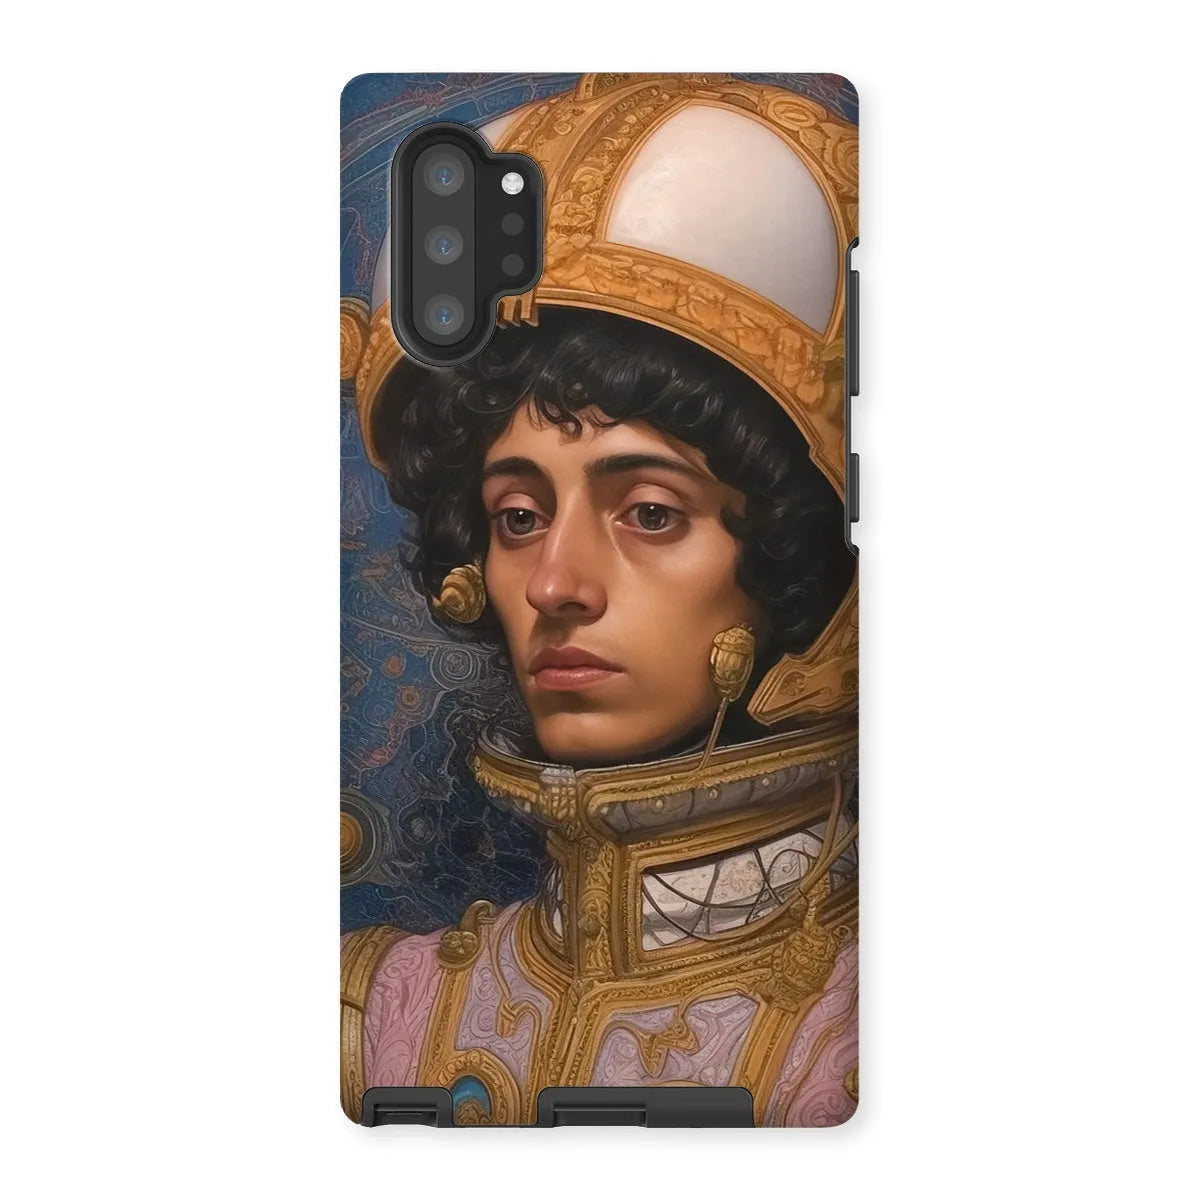 Samir The Gay Astronaut - Lgbtq Art Phone Case - Samsung Galaxy Note 10p / Matte - Mobile Phone Cases - Aesthetic Art